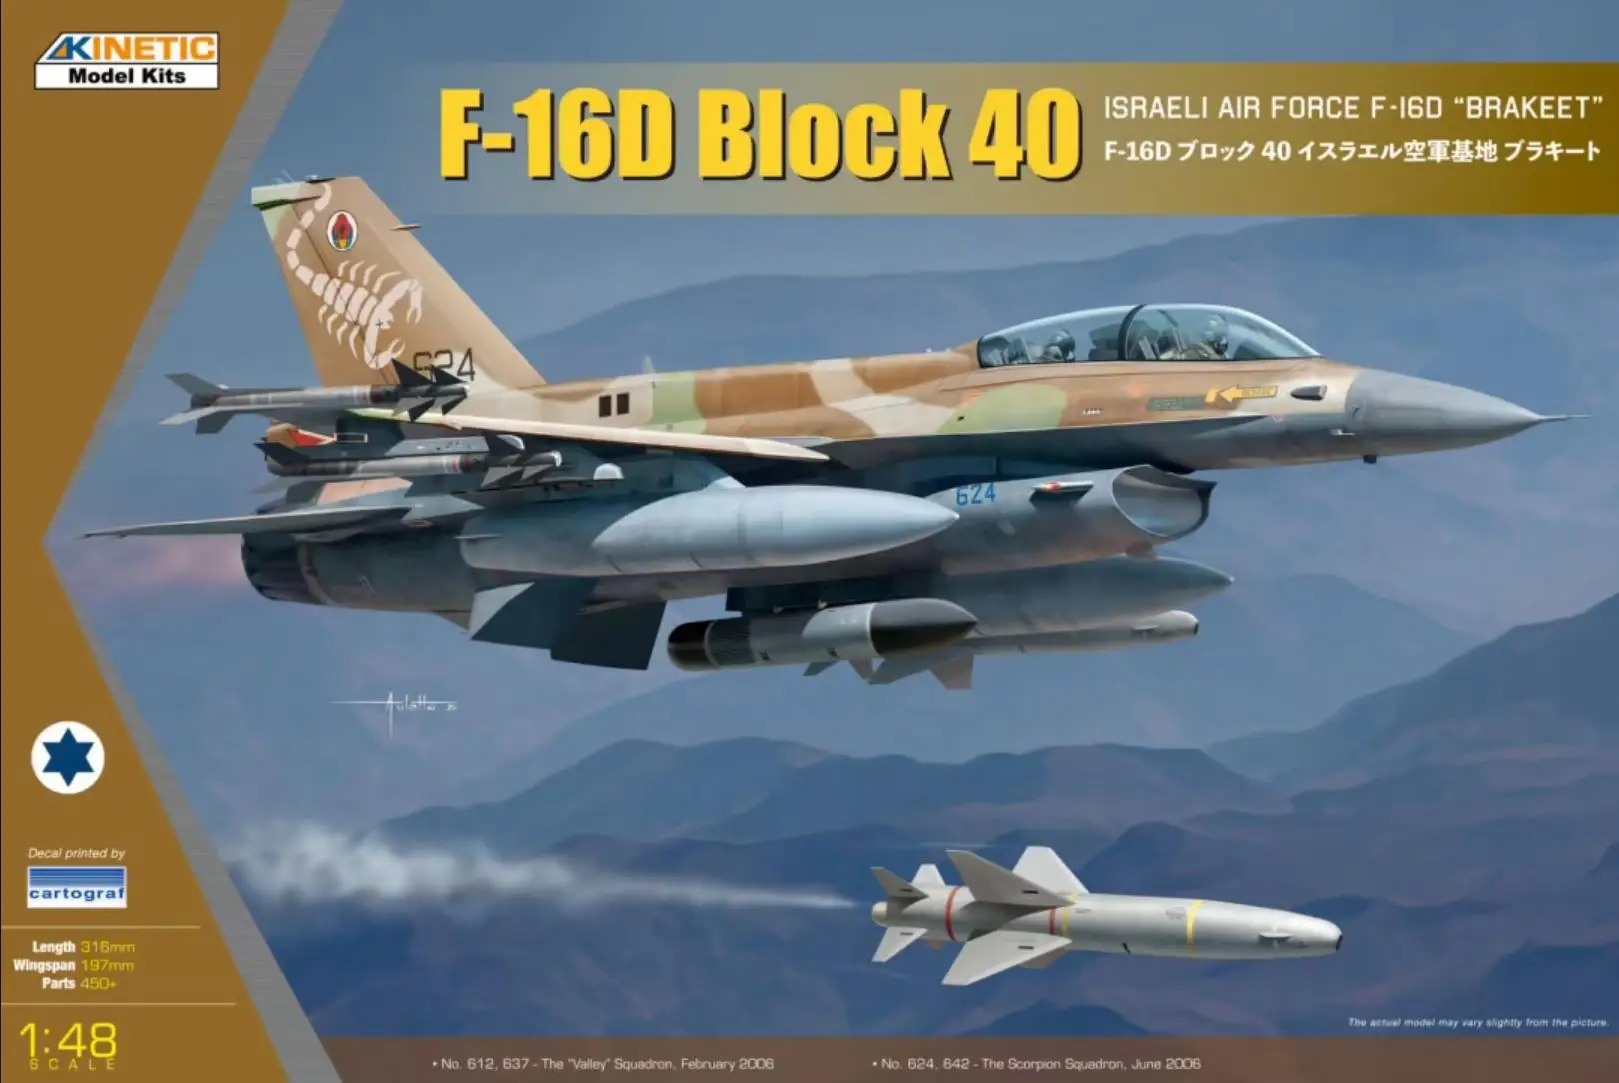 

KINETIC K48130 1/48 Scale F-16D Block 40 model kit